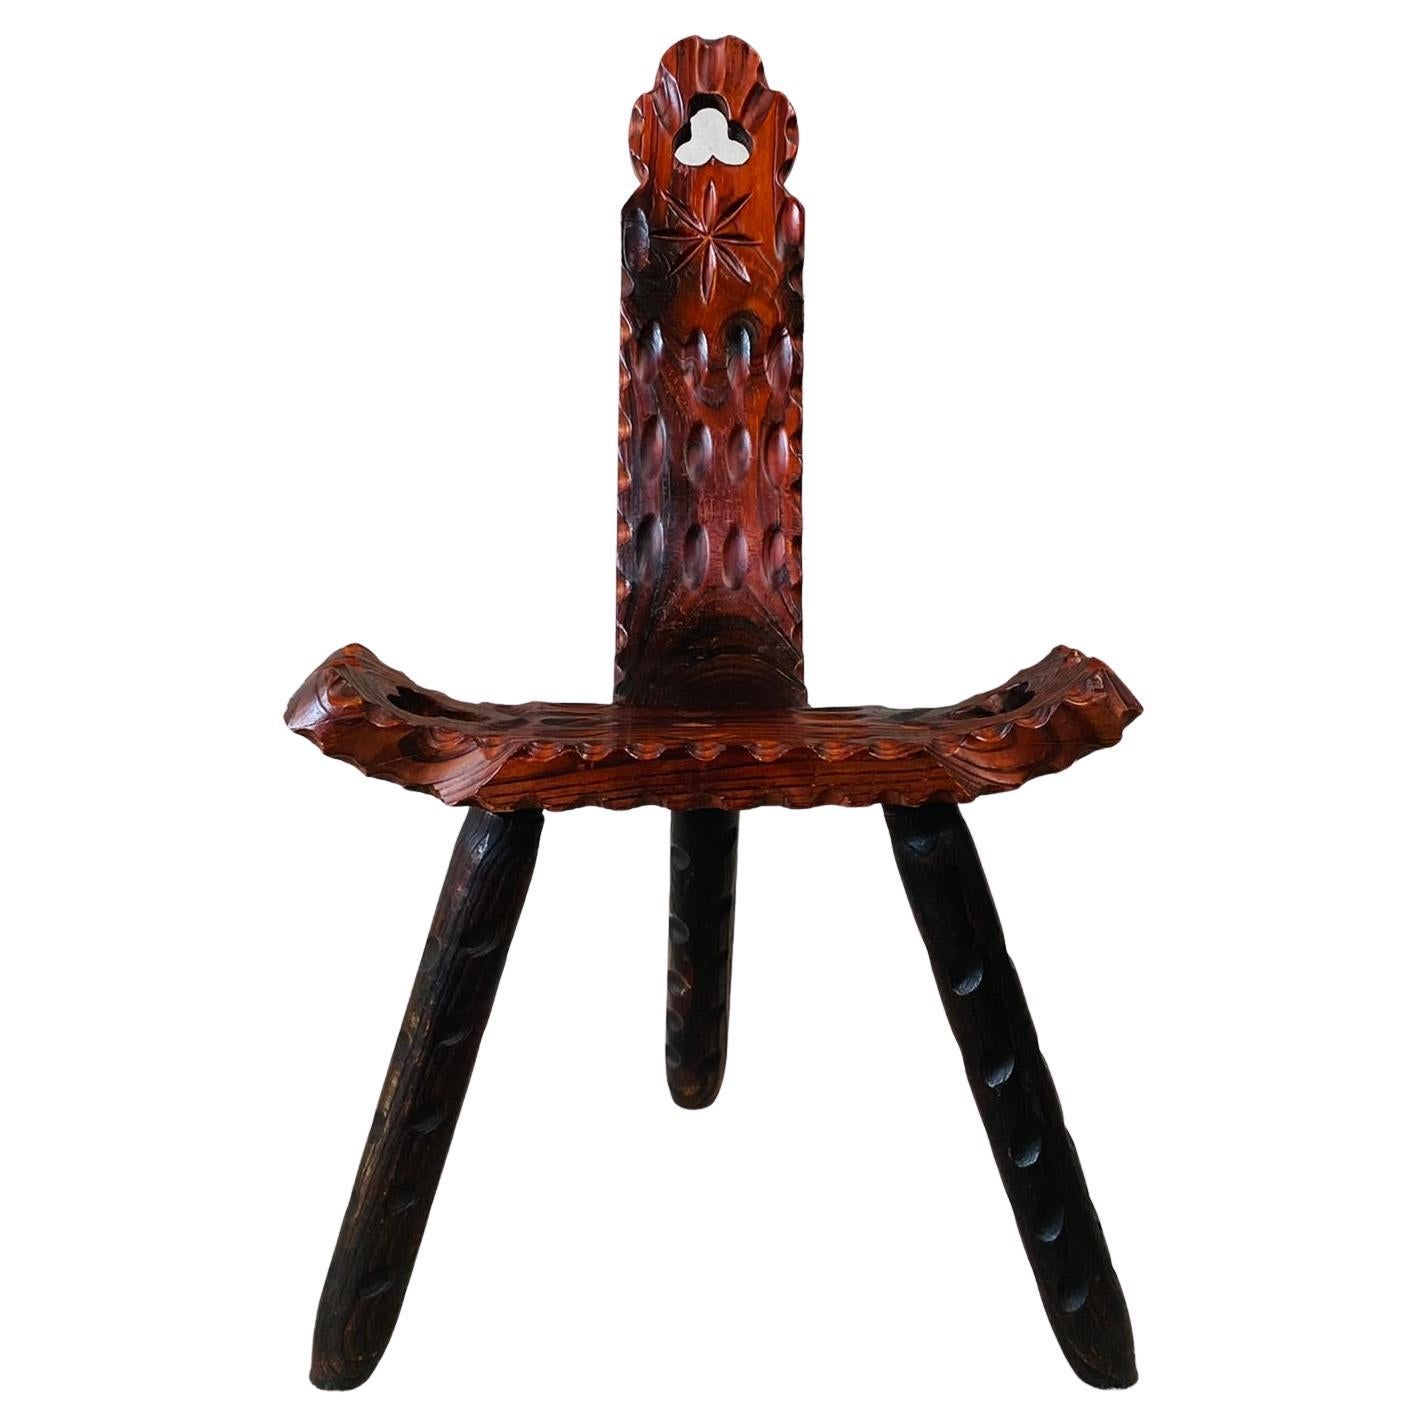 Brutalist Spanish Midcentury Sculptural Tripod Chair 1950 For Sale